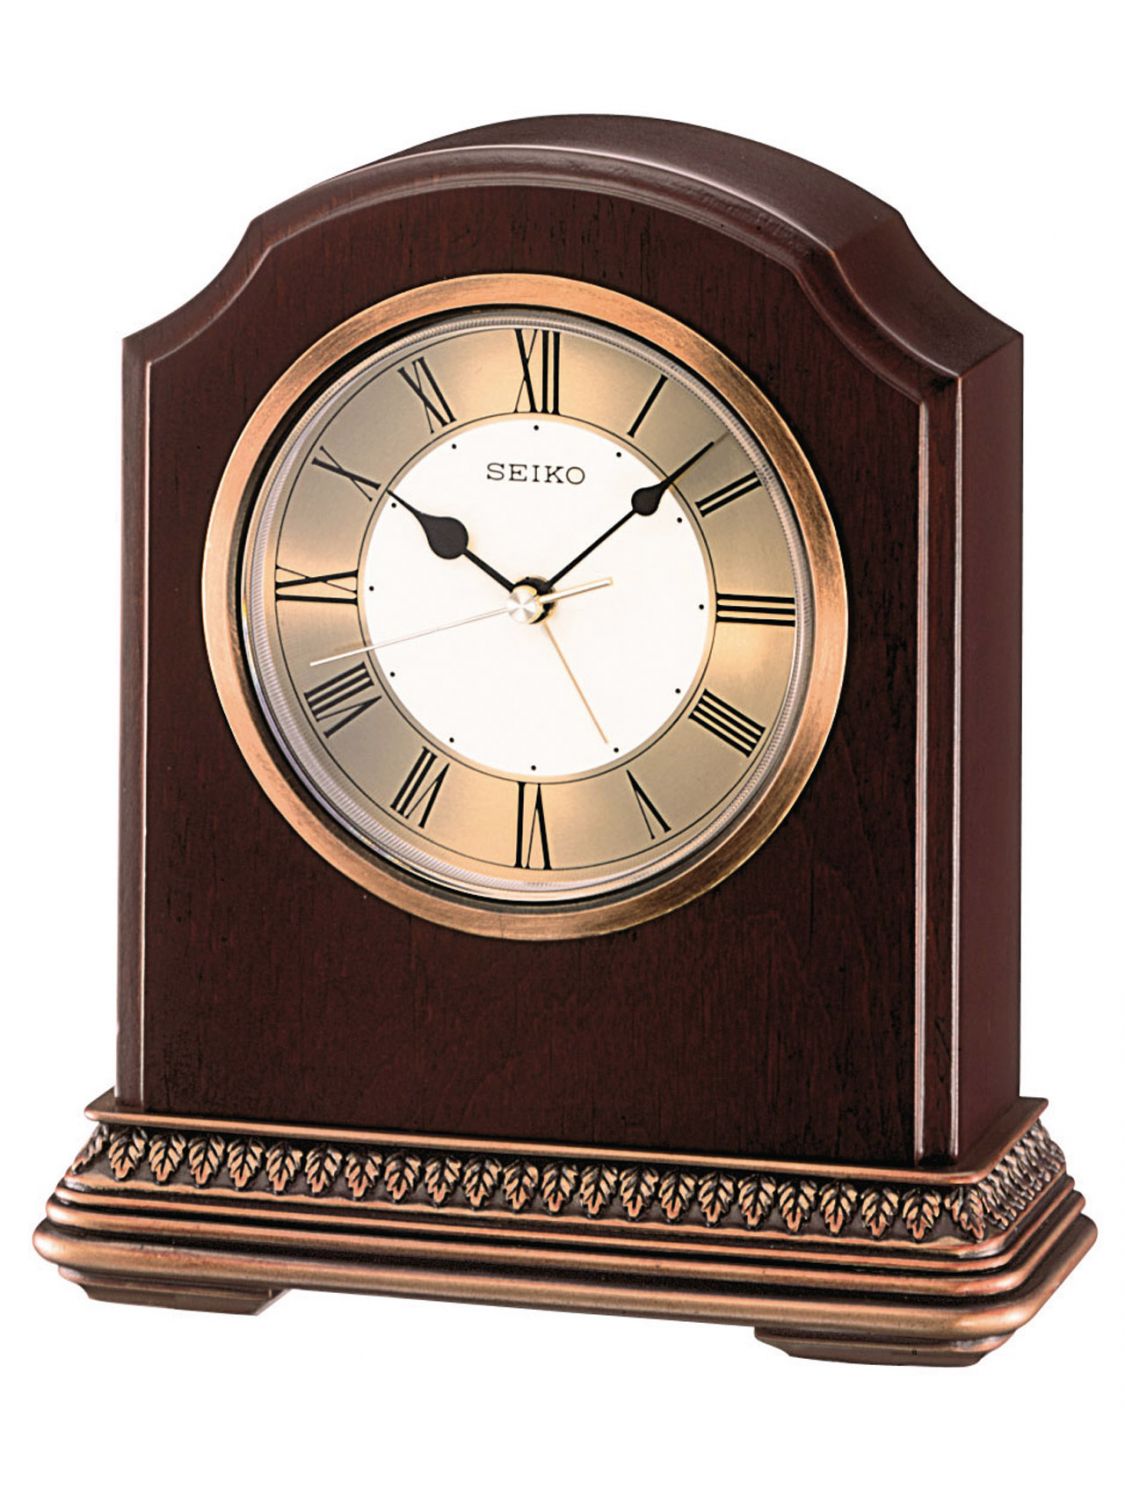 SEIKO QXE018B Table Clock with Alarm Function Brown Wood